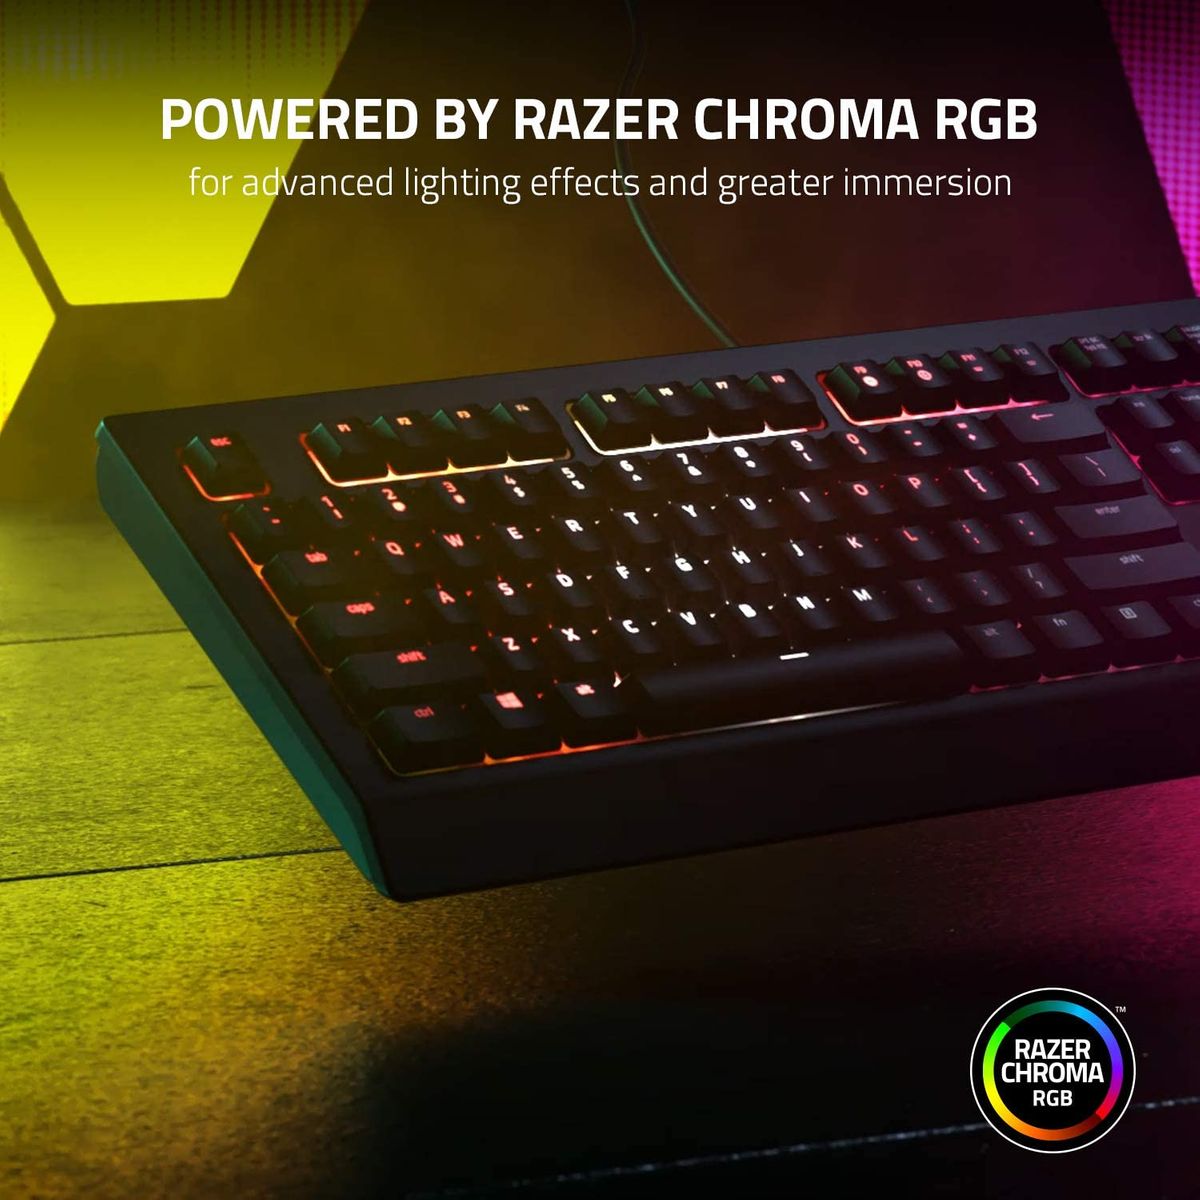 RAZER Cynosa V2 Chroma RGB Membrane Gaming Keyboard (USA Layout - QWERTY)